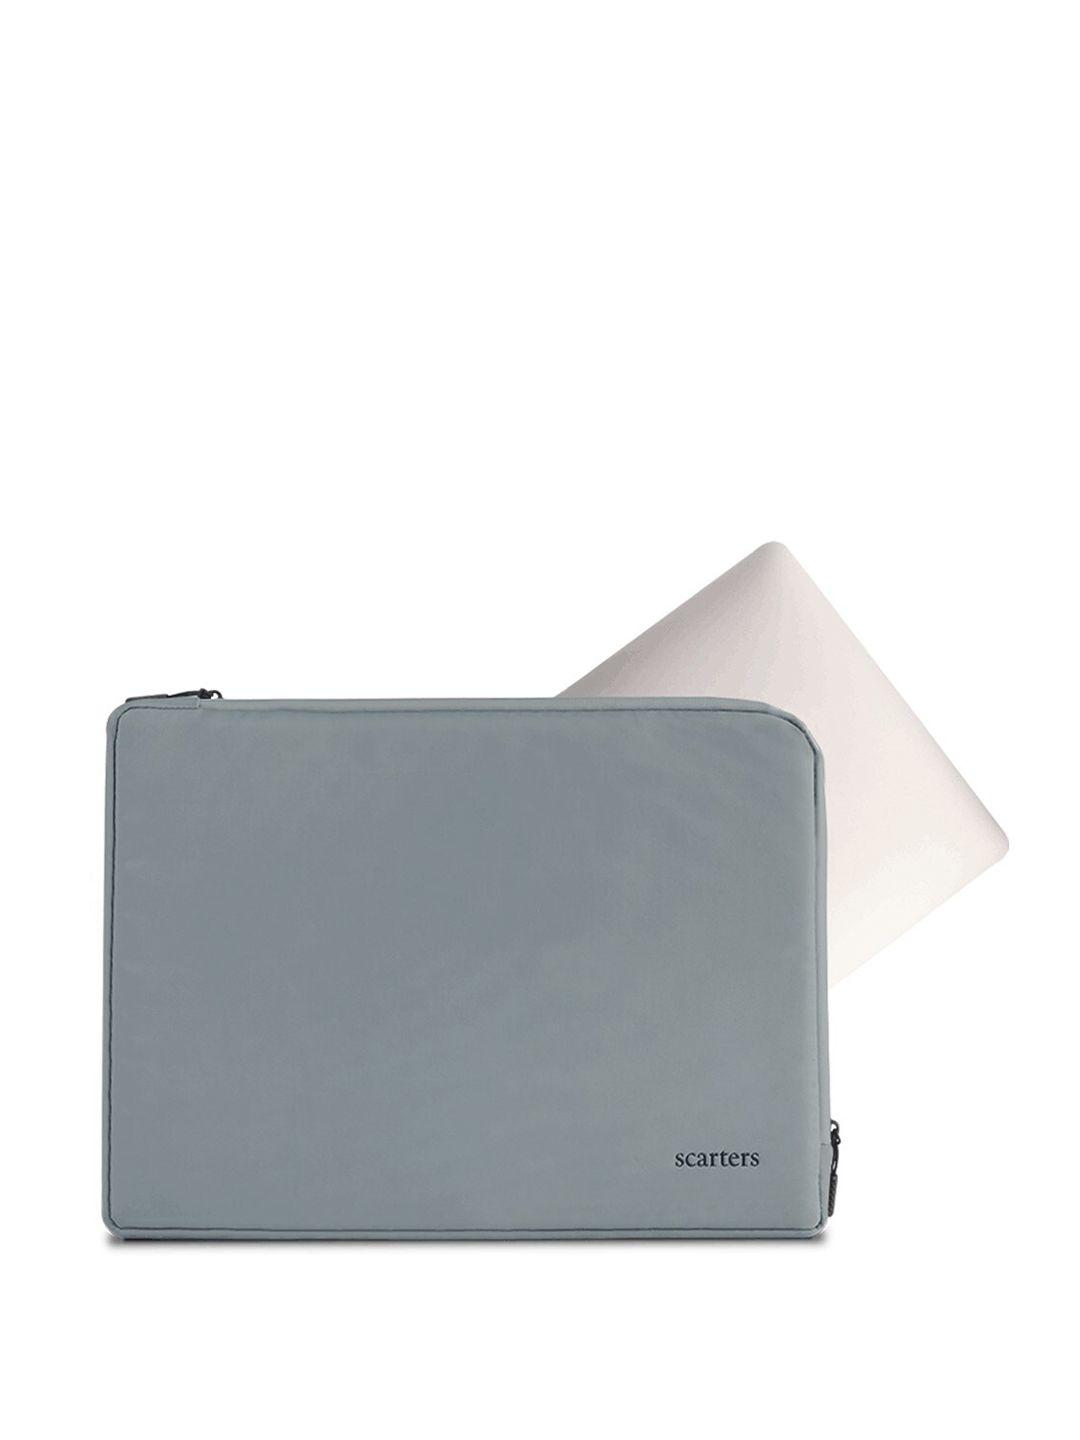 scarters unisex grey laptop sleeve